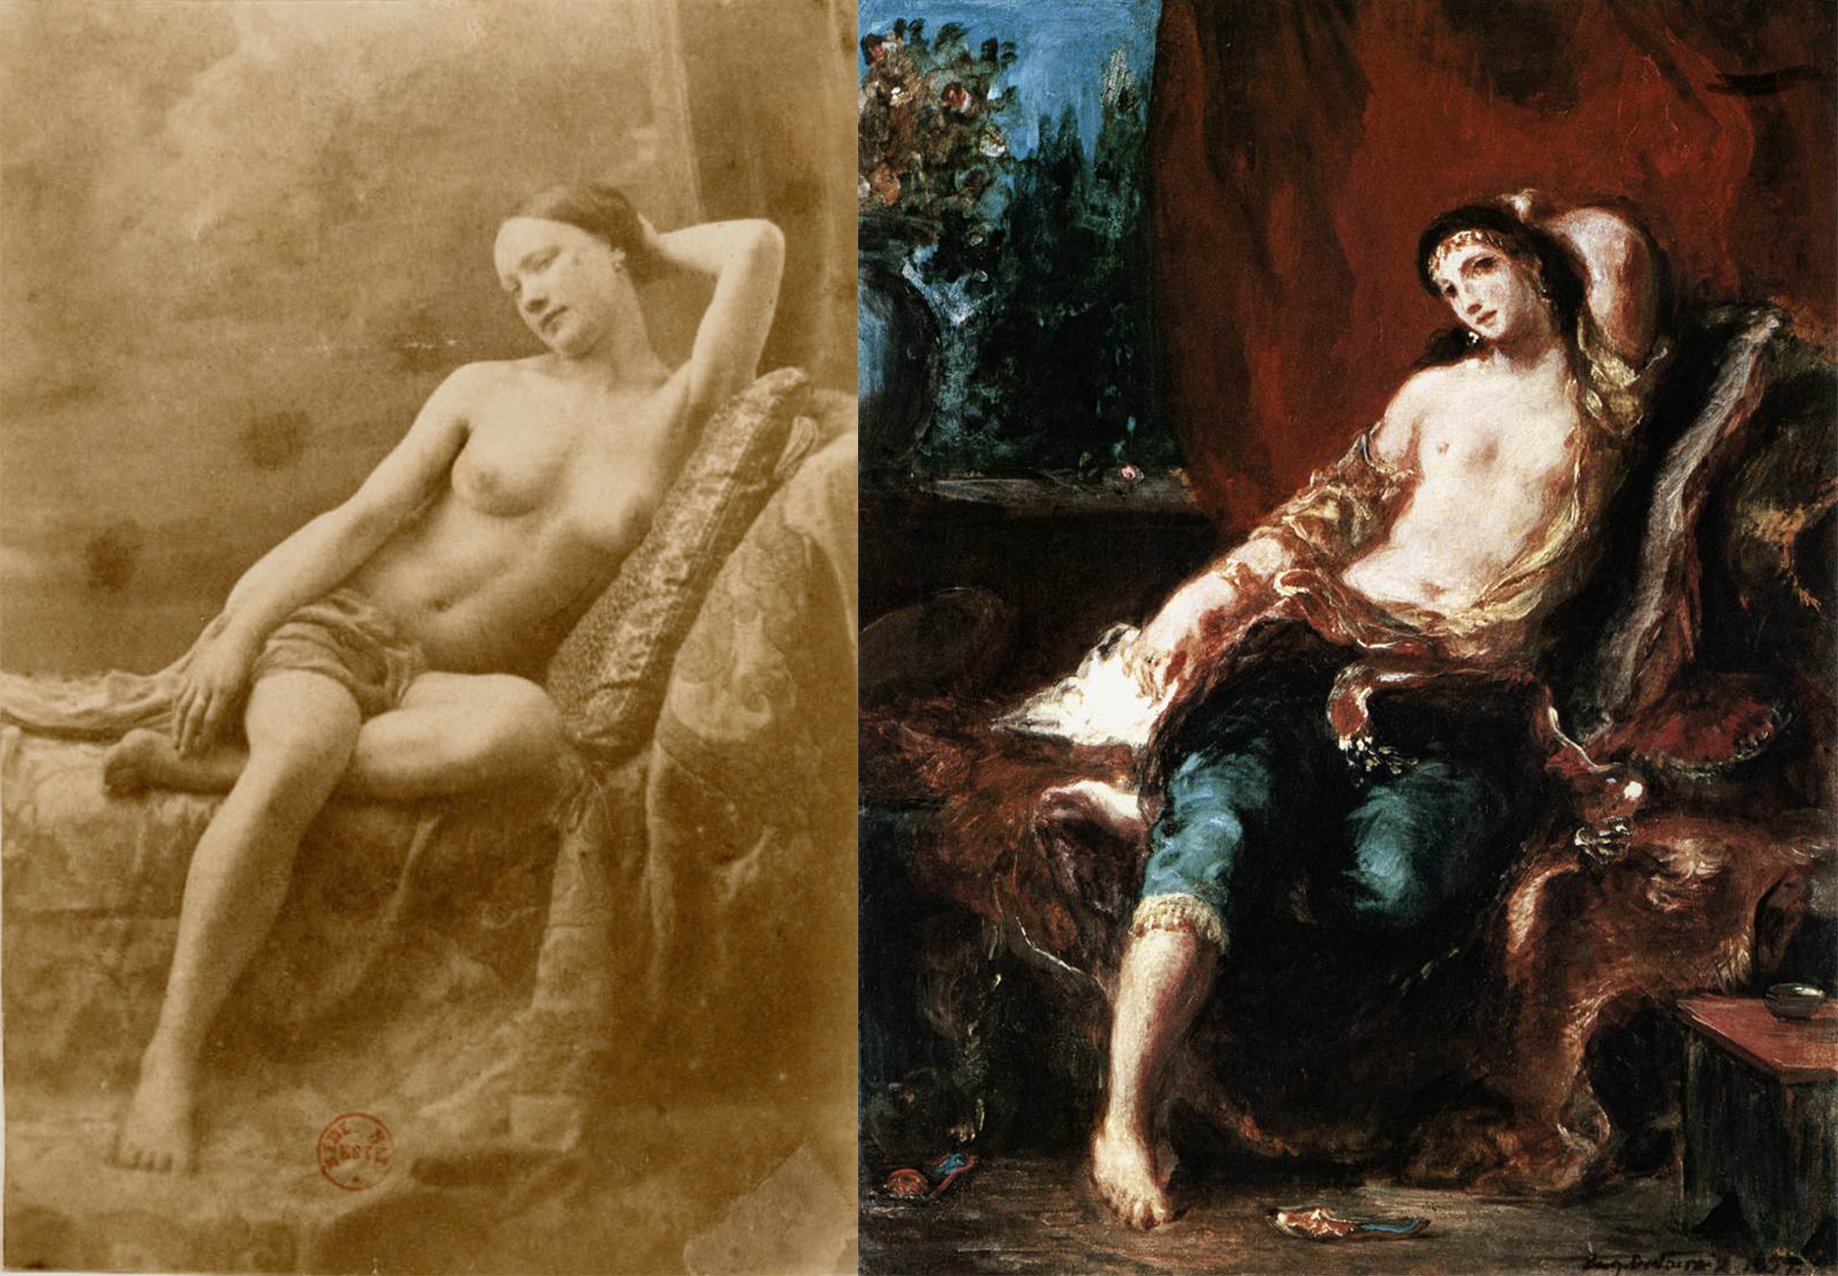 Одалиска/ Одалиска by Eugène Durieu / Eugène Delacroix - 1833/1857 